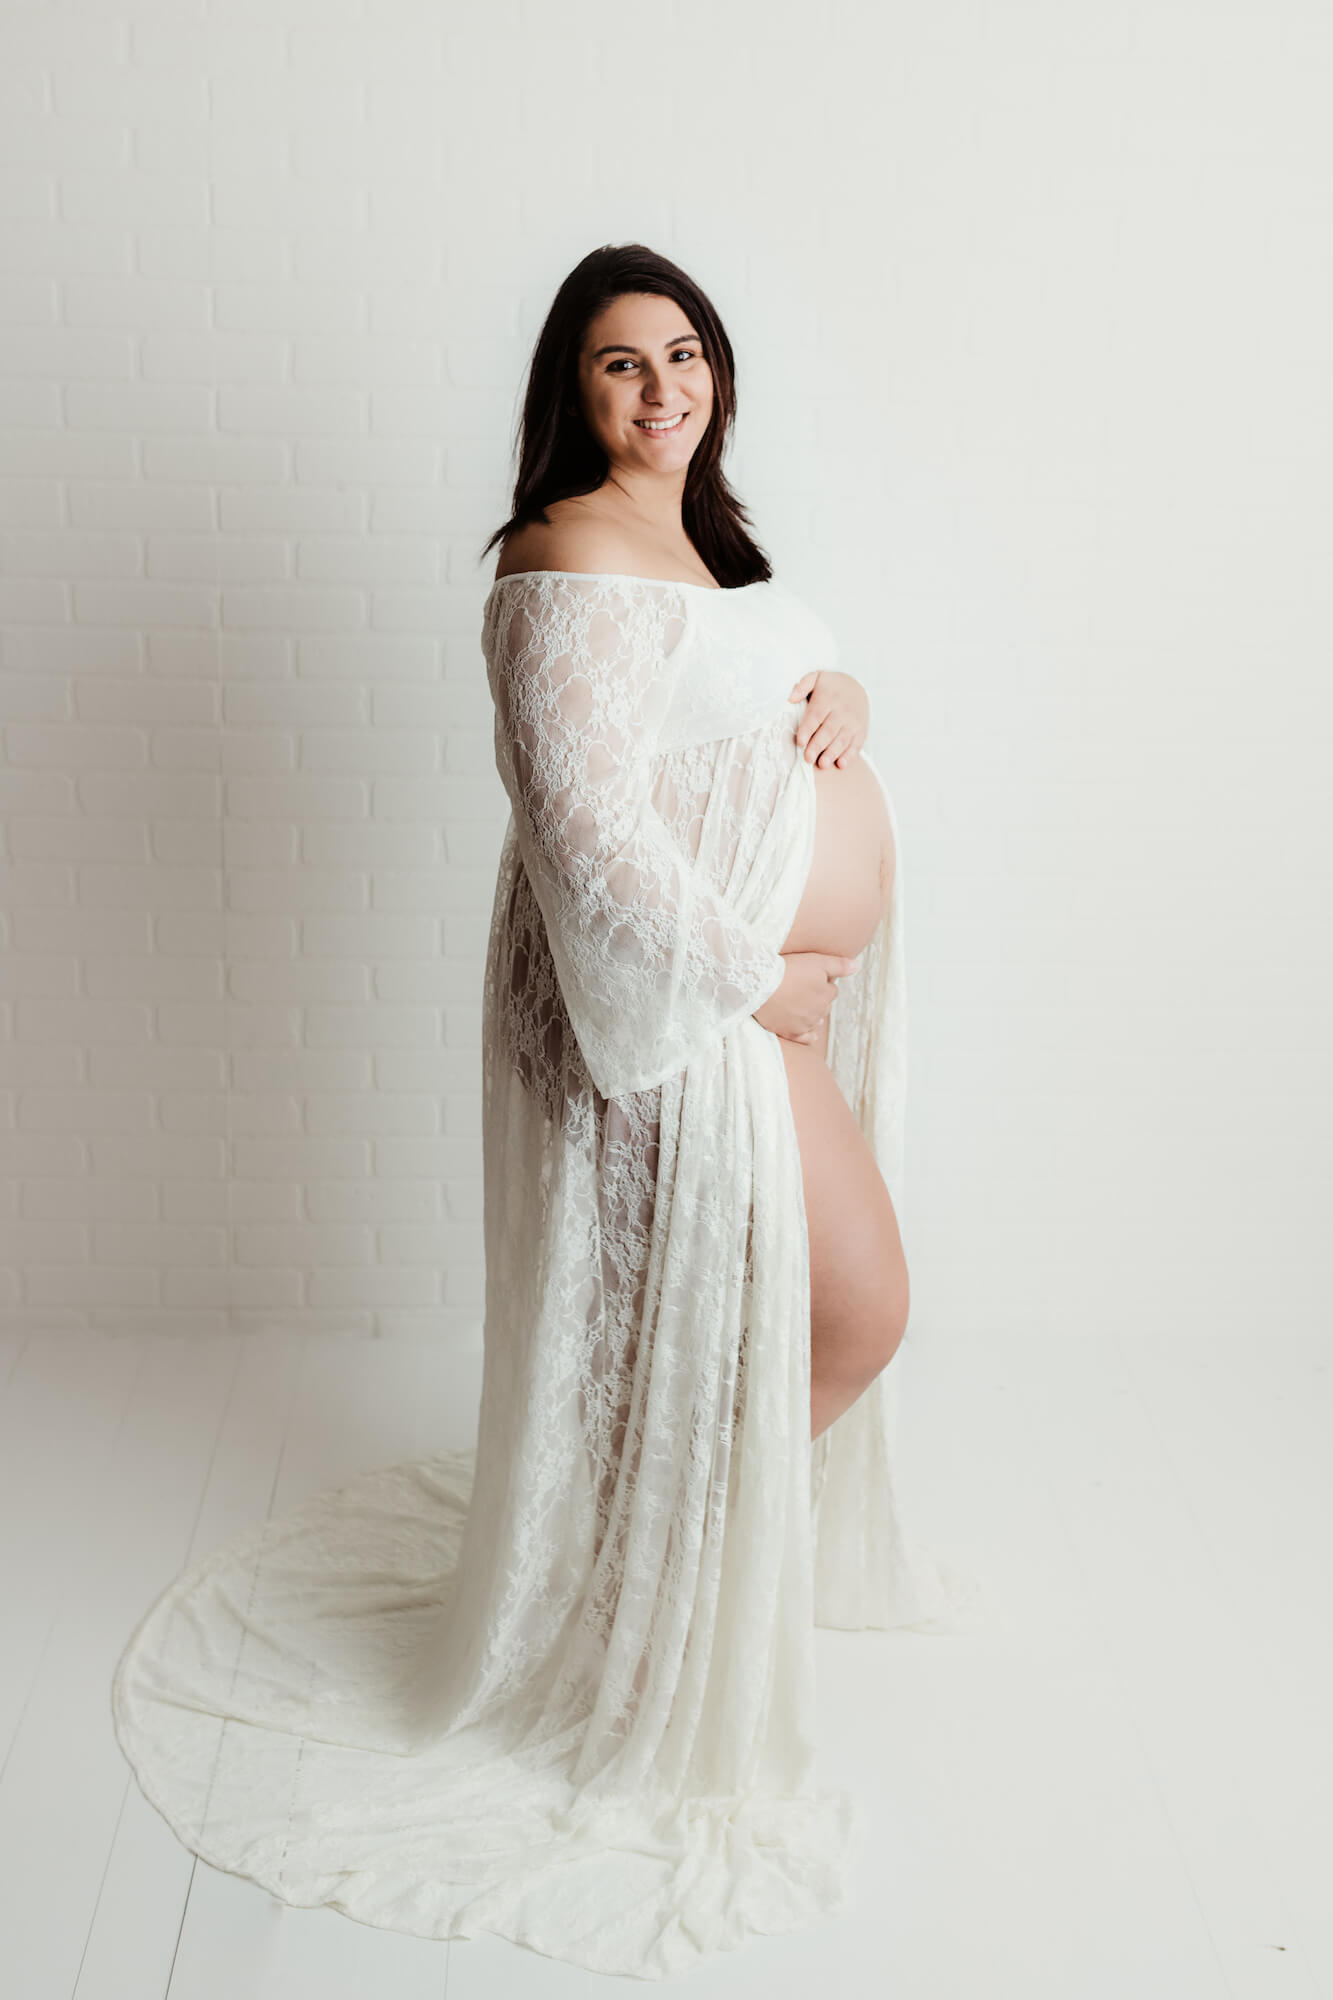 Studio Maternity Session Cobb County Pregnancy Photoshoot Courtney